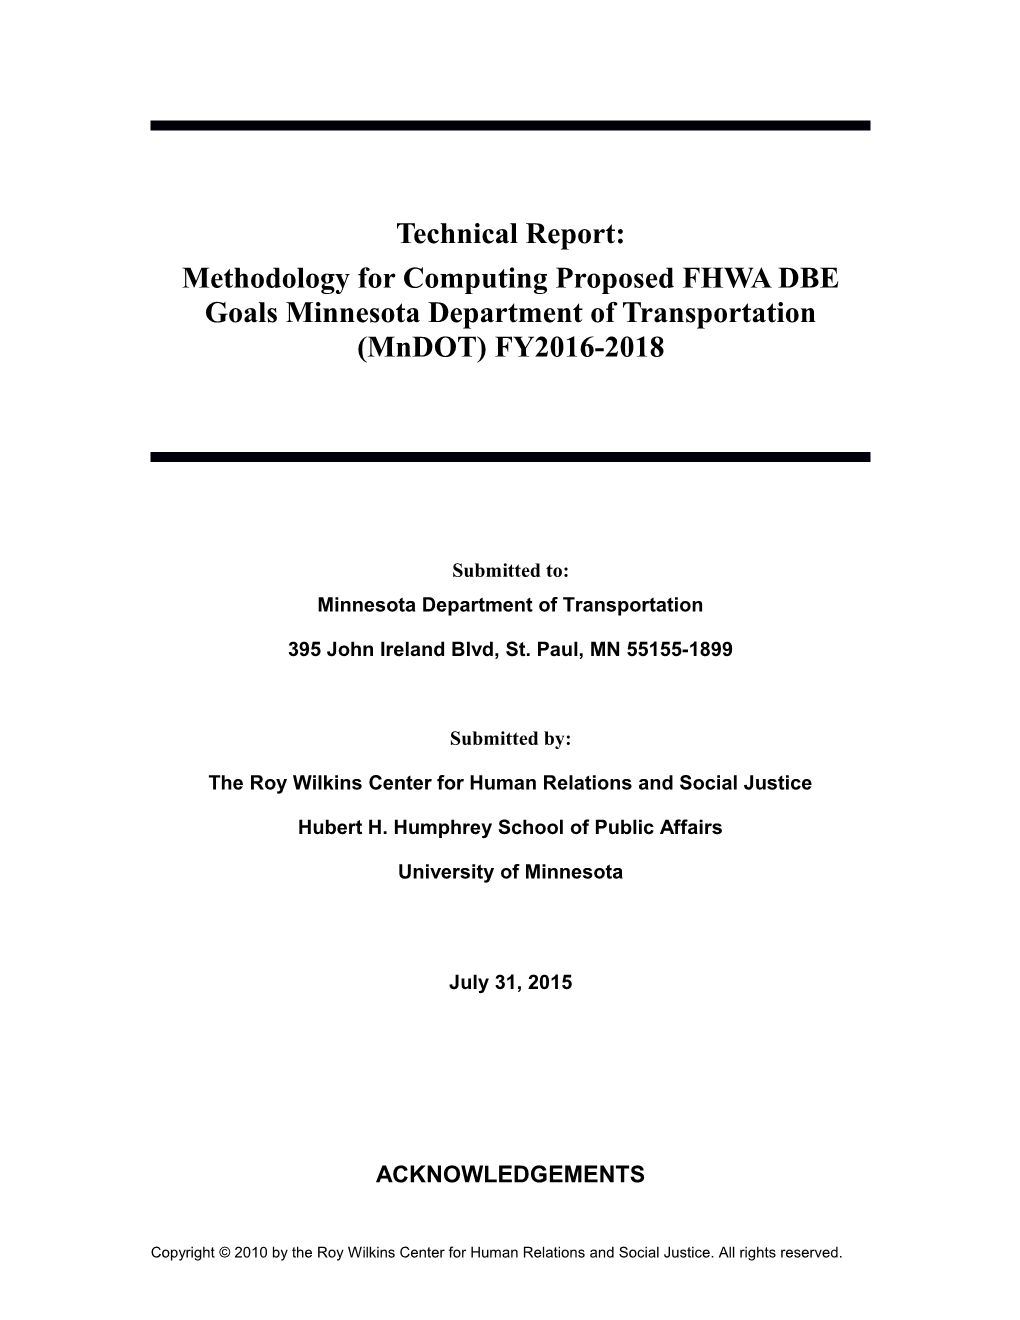 Methodology for Computing Proposed FHWA DBE Goals Minnesota Department of Transportation